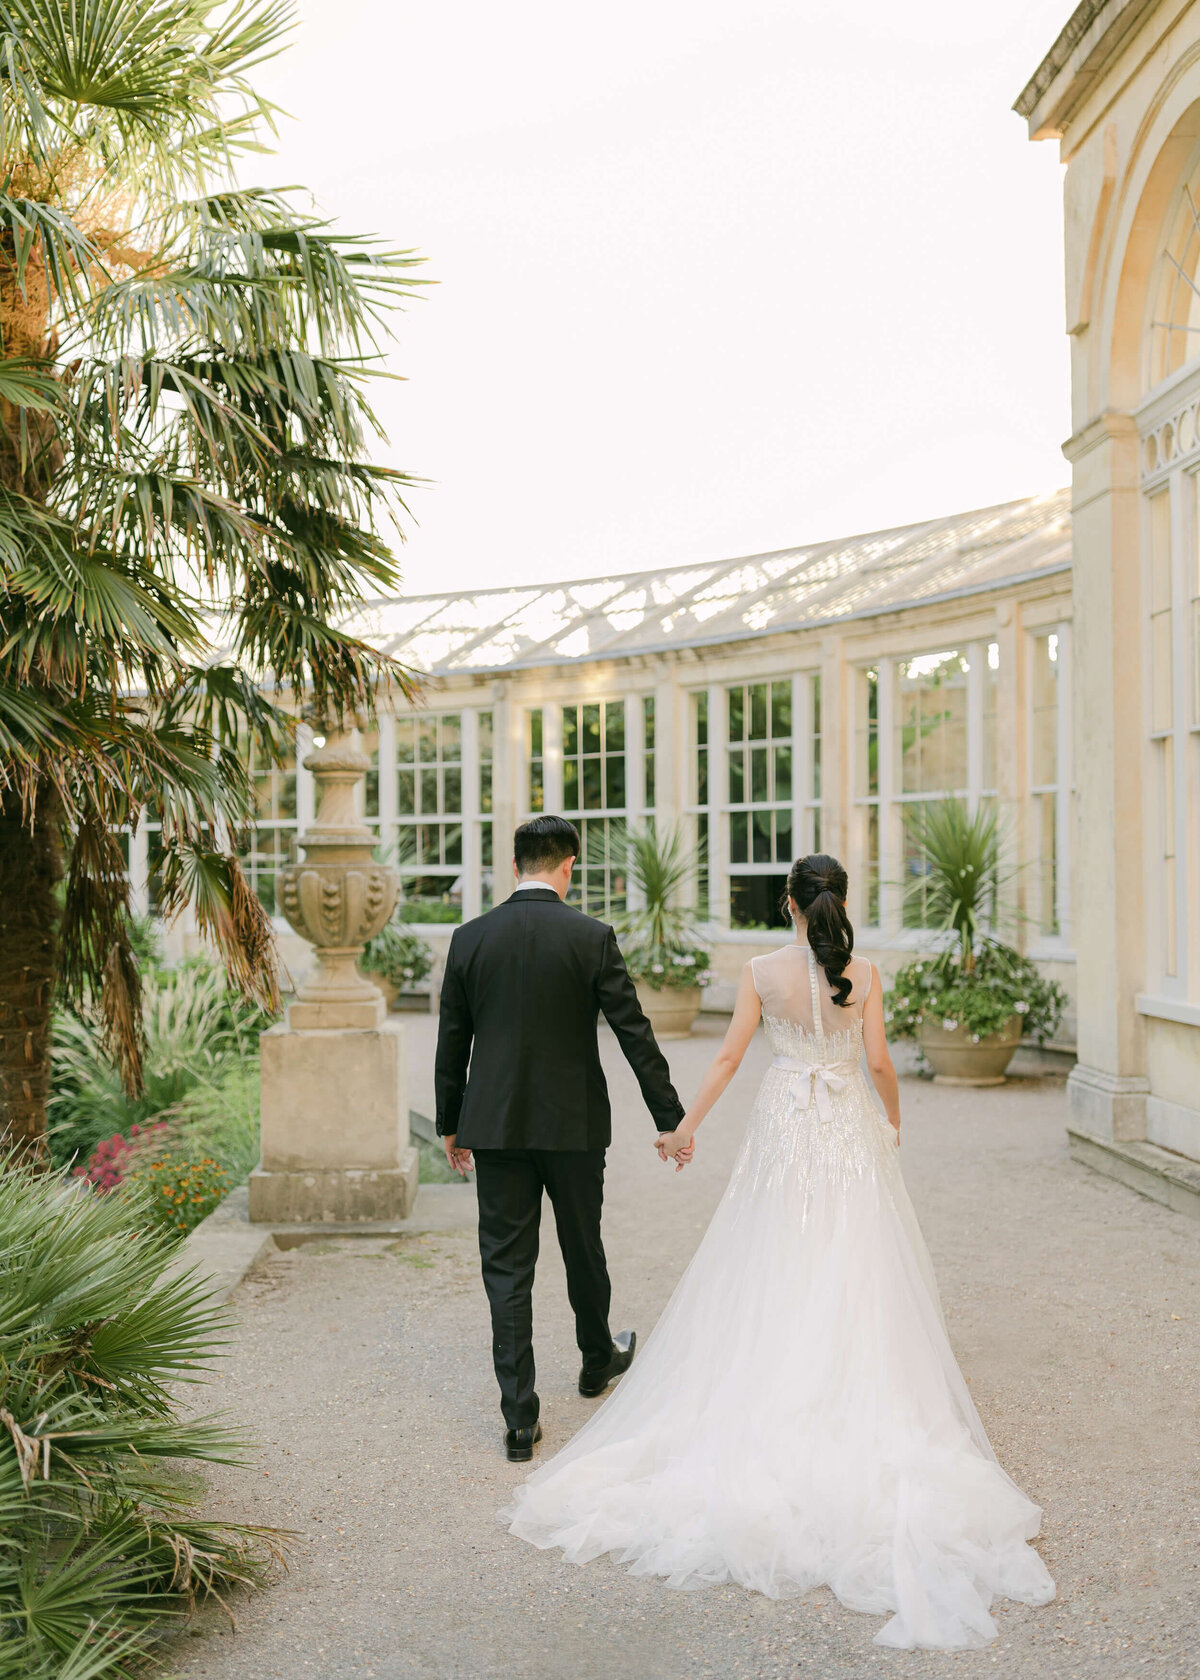 chloe-winstanley-weddings-syon-park-elie-saab-couple-conservatory-walking